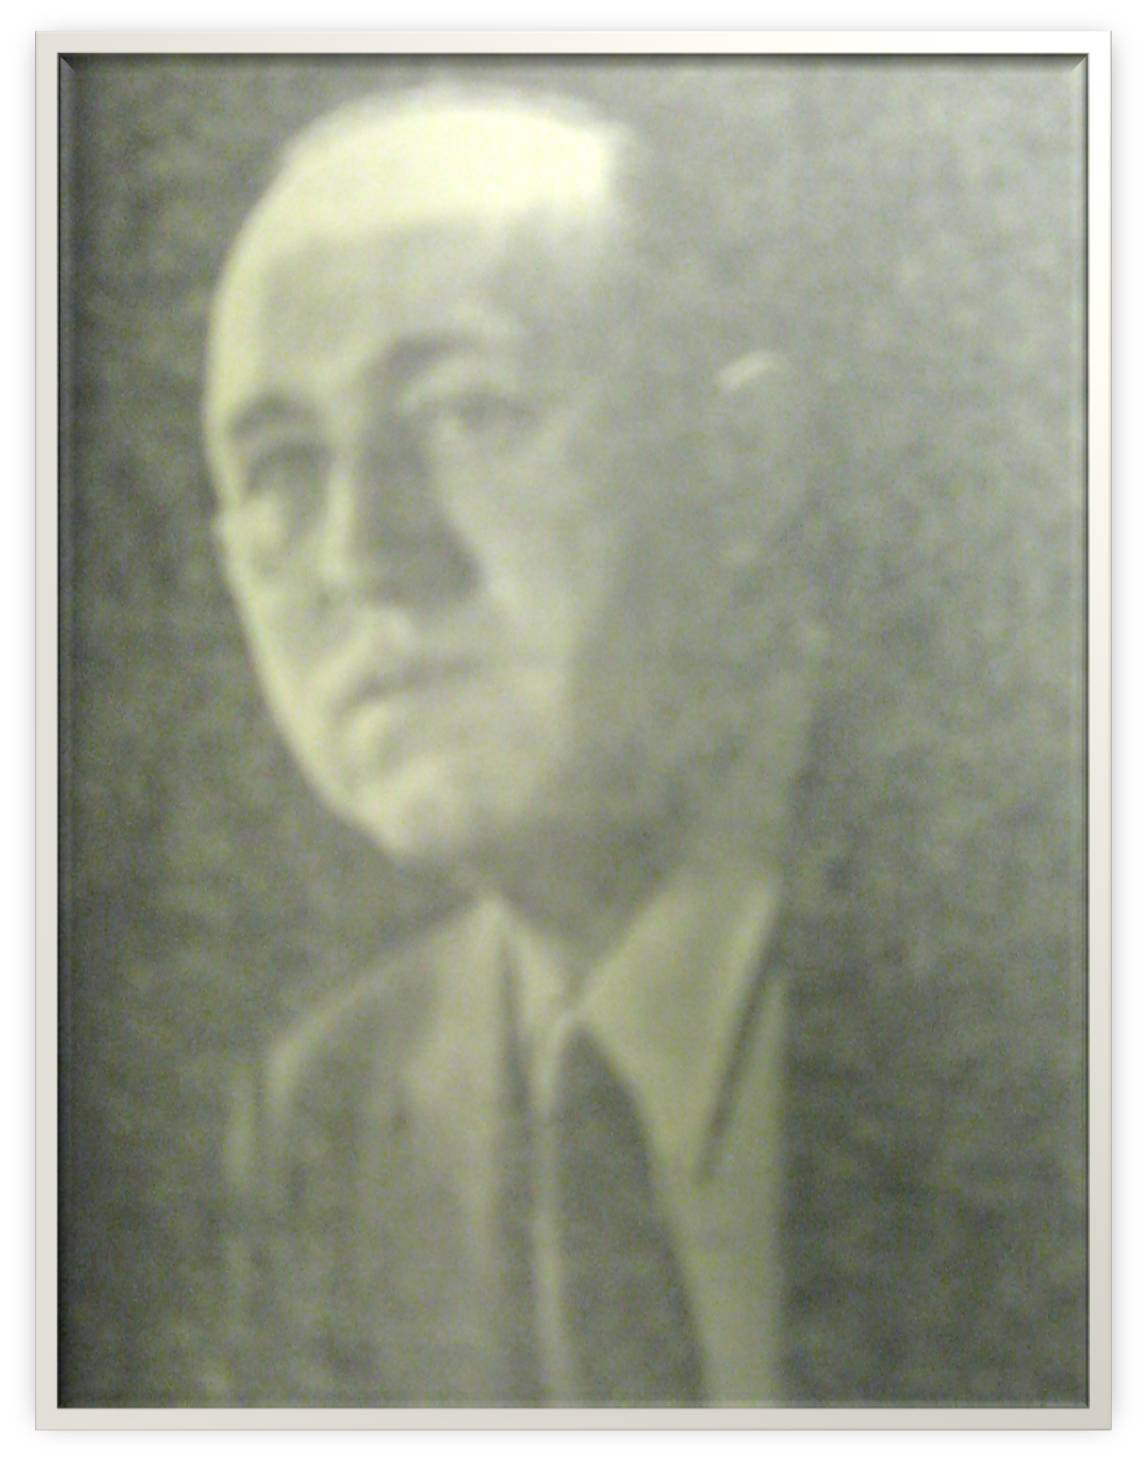 Mayor J. W. Arnold